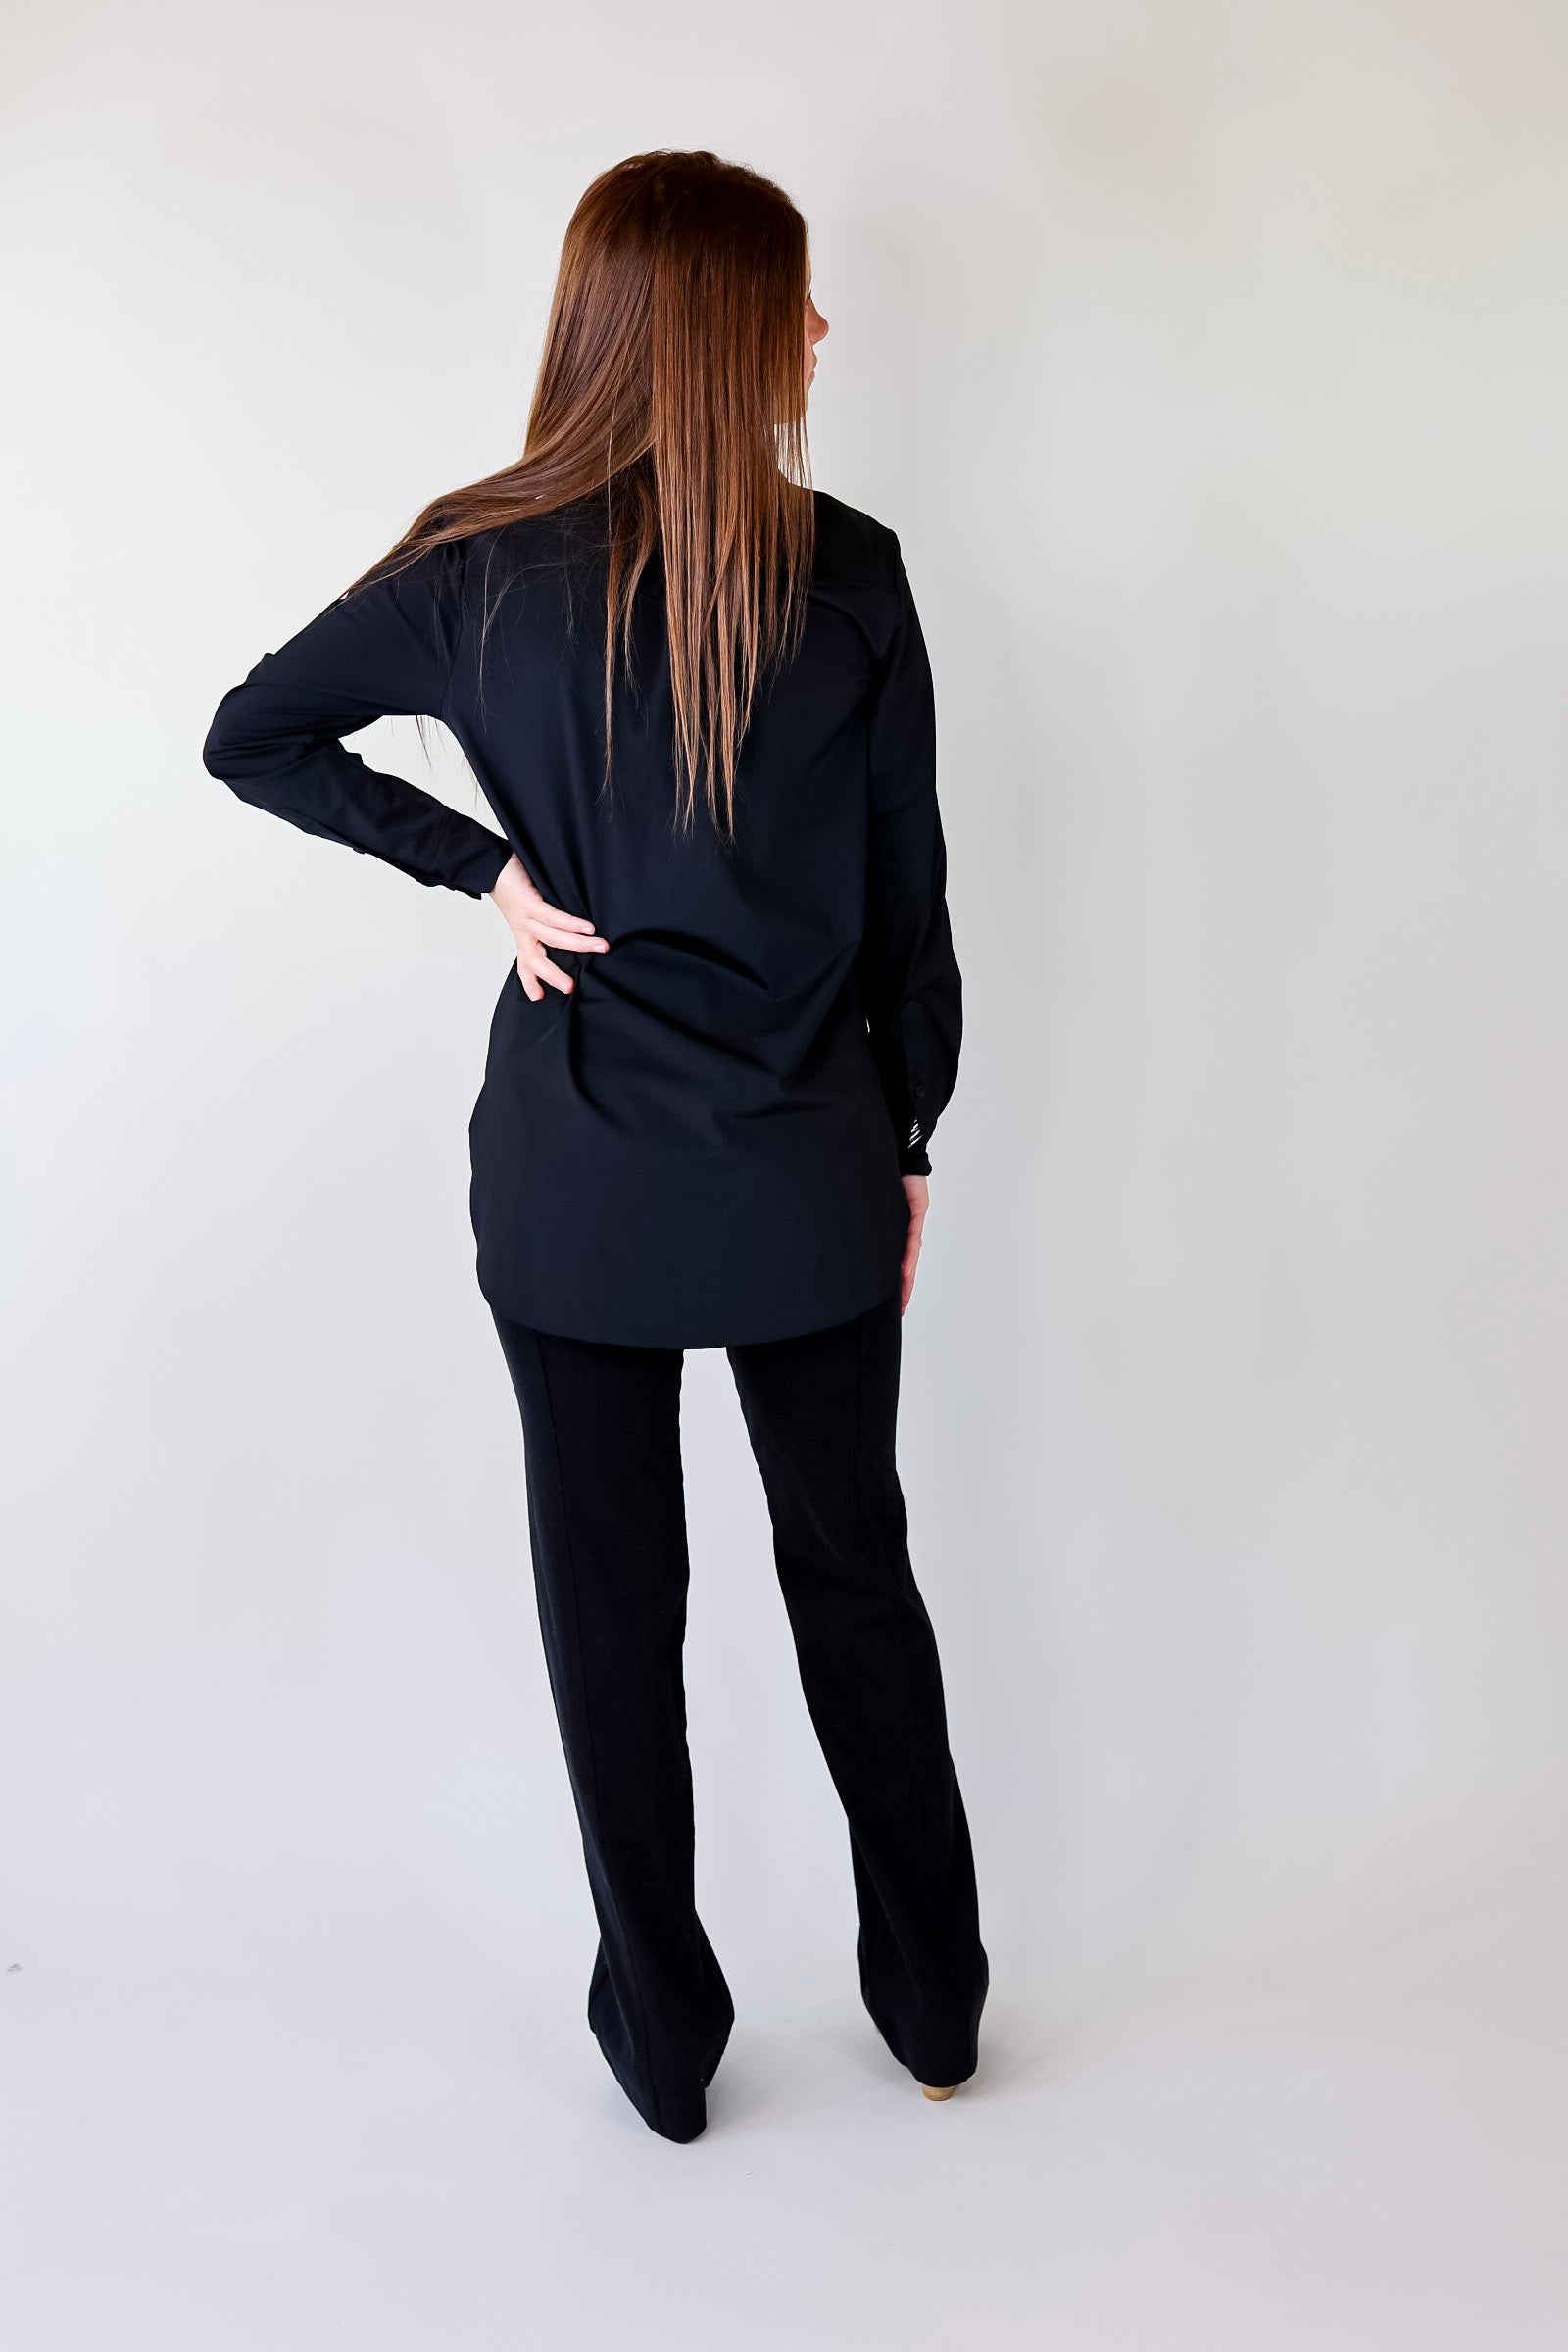 Lyssé | Schiffer Button Down Dress Shirt in Black - Giddy Up Glamour Boutique